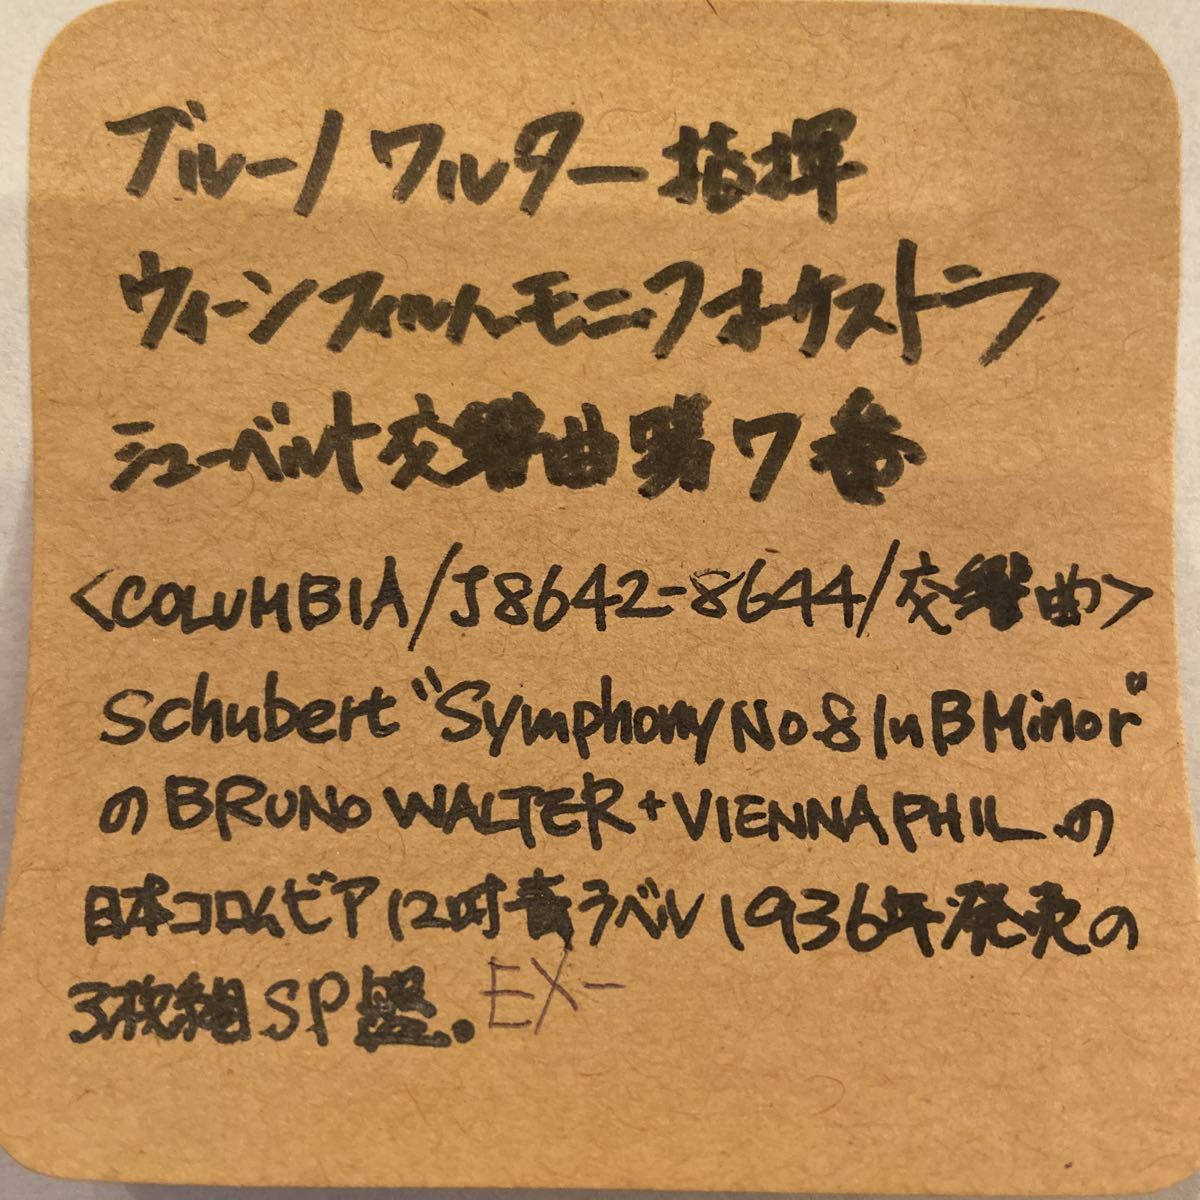 SP record 3 sheets set blue no*waruta- finger ./ we n Phil is - moni ko-ke -stroke la/ shoe belt symphony no. 7 number / J8642-8644 / 5 point and more . carriage less 